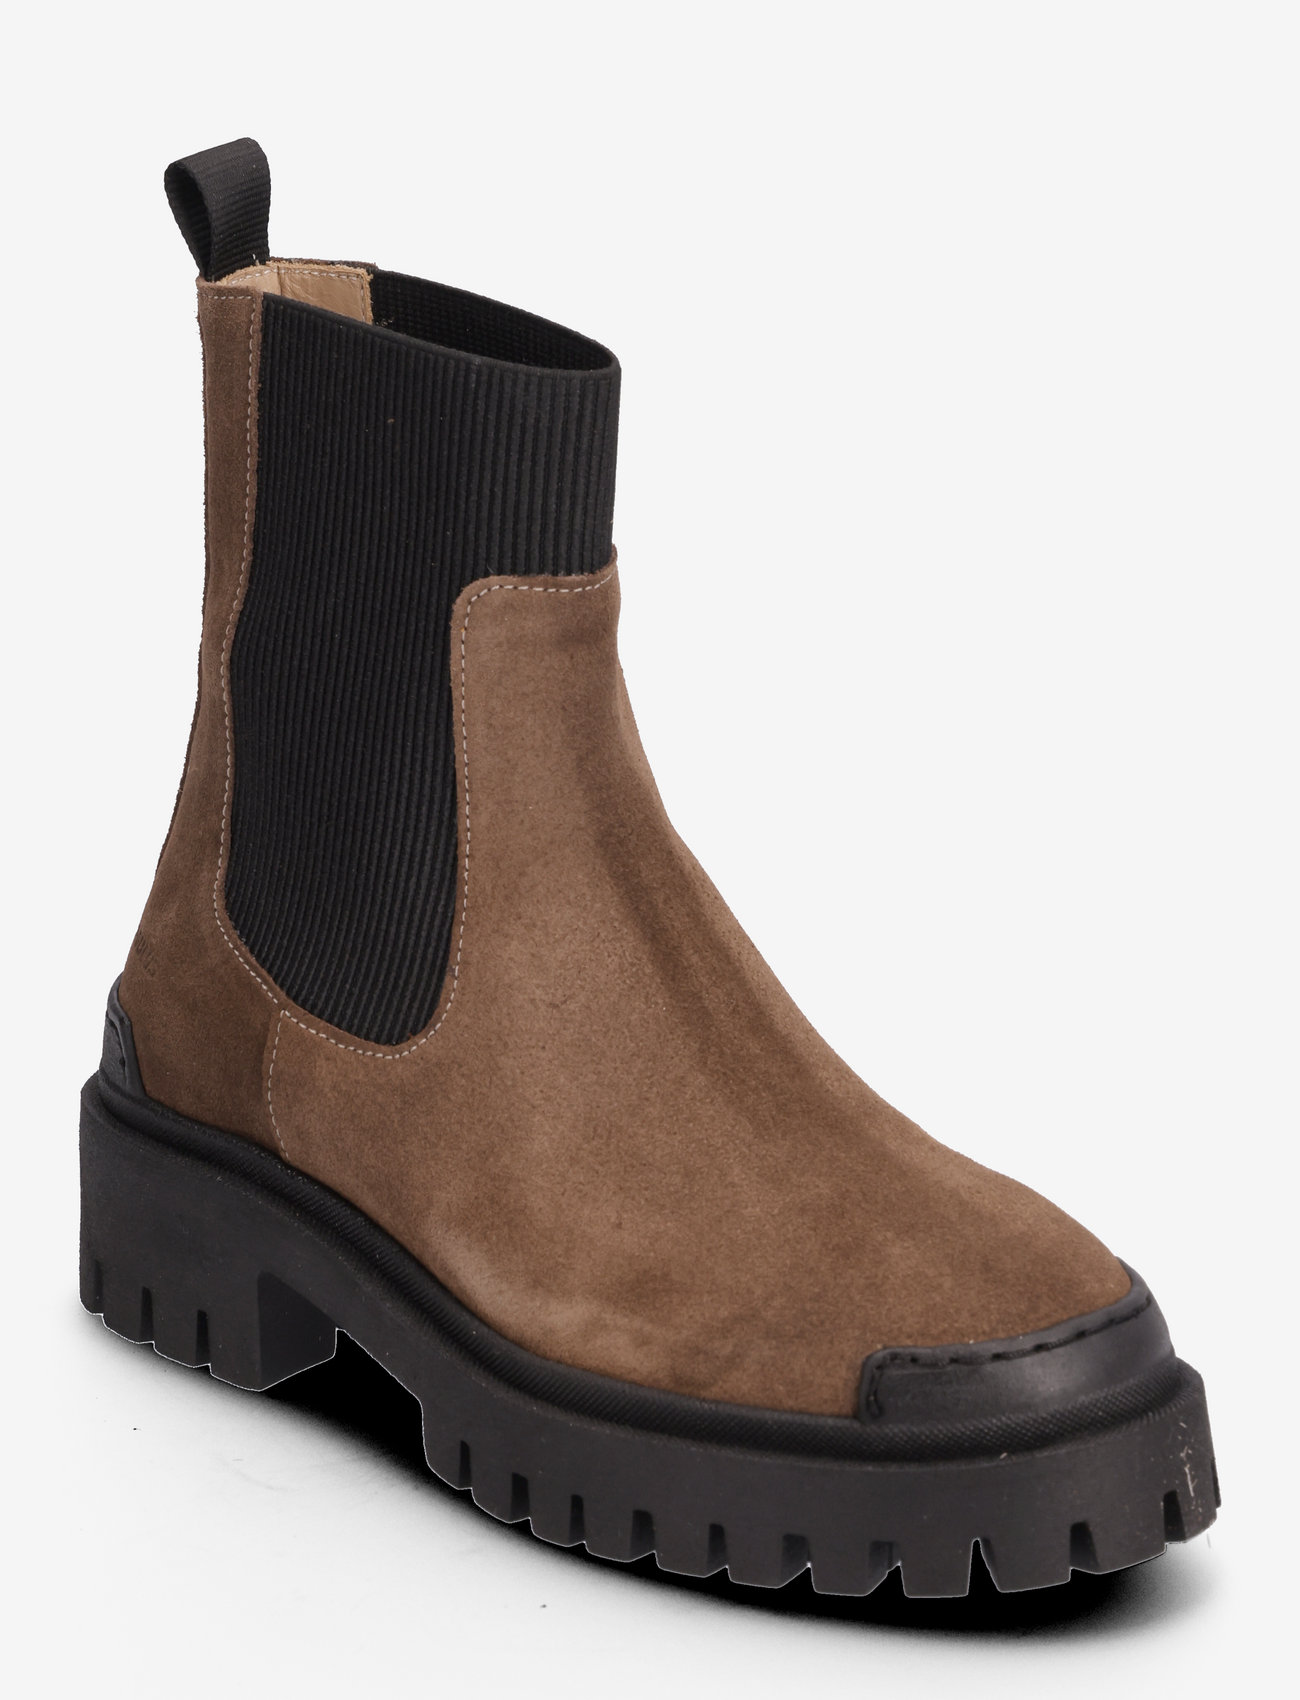 ANGULUS - Boots - flat - chelsea stila zābaki - 1753/019 taupe/black - 0